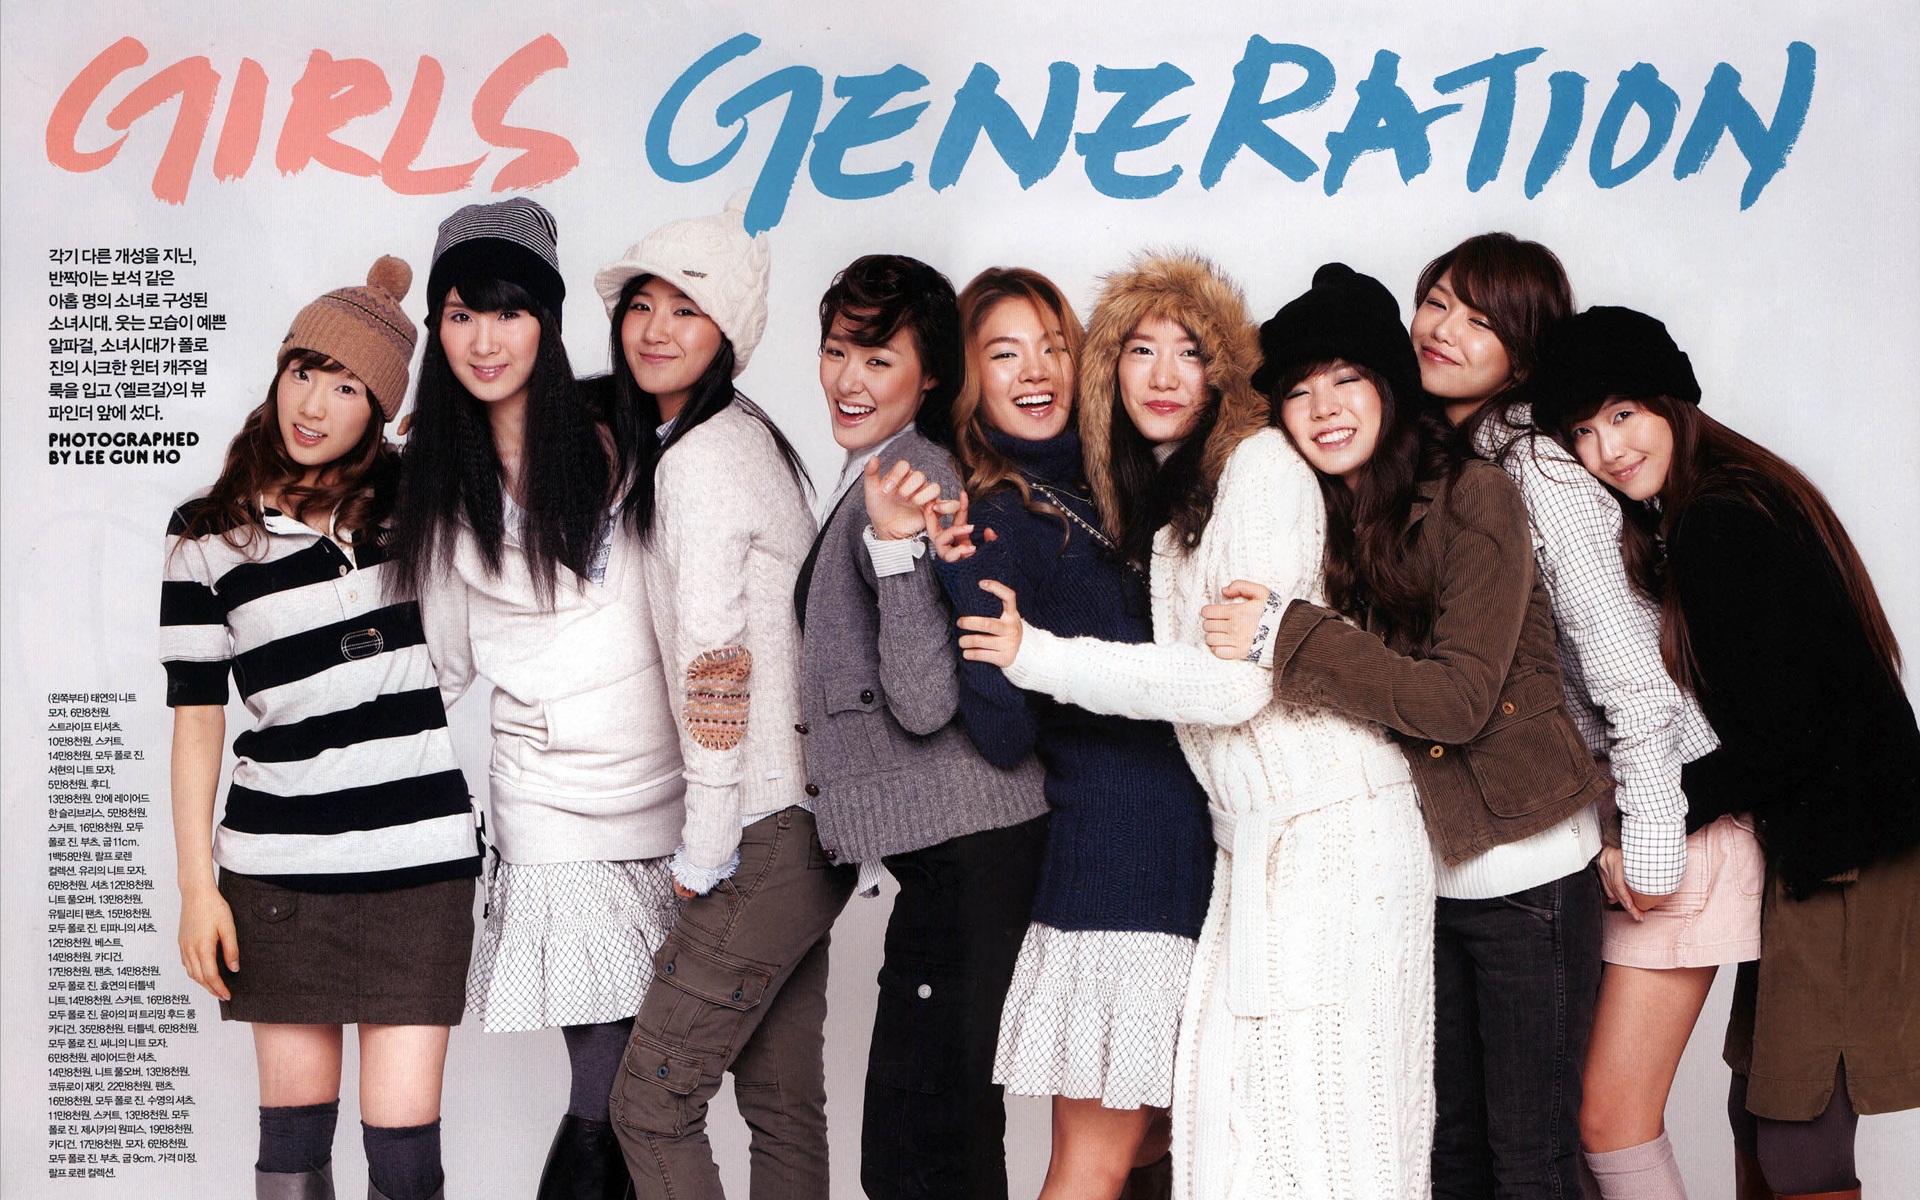 Girls Generation neuesten HD Wallpapers Collection #23 - 1920x1200